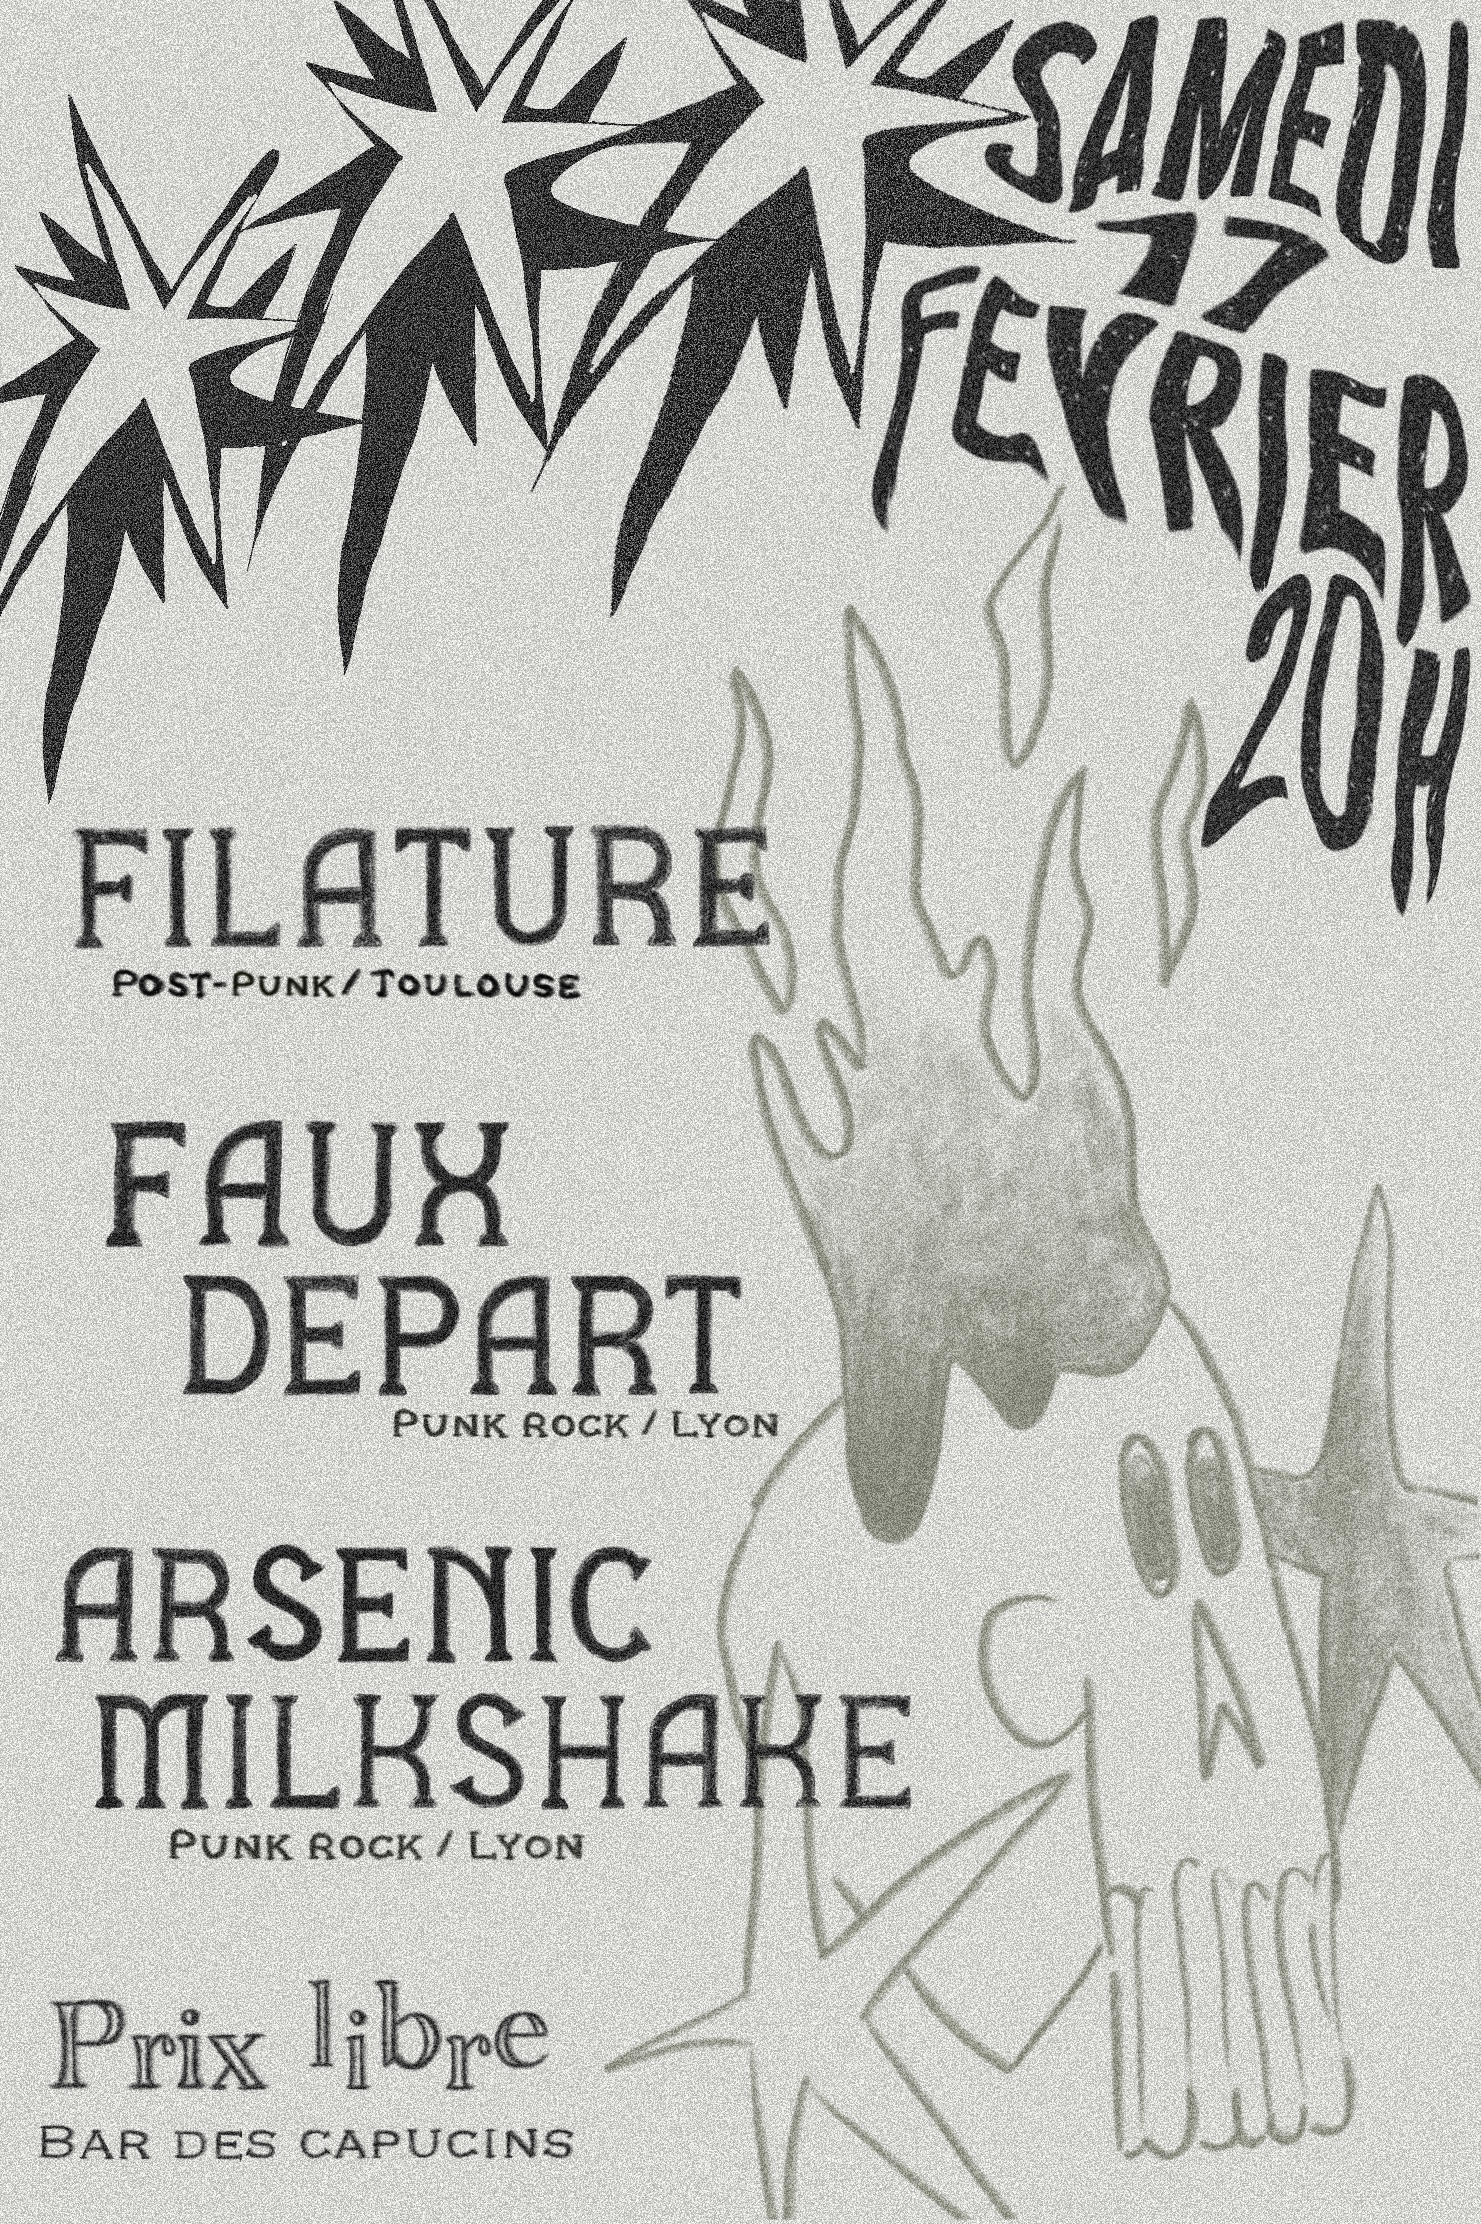 Filature + Faux départ + Arsenic Milkshake